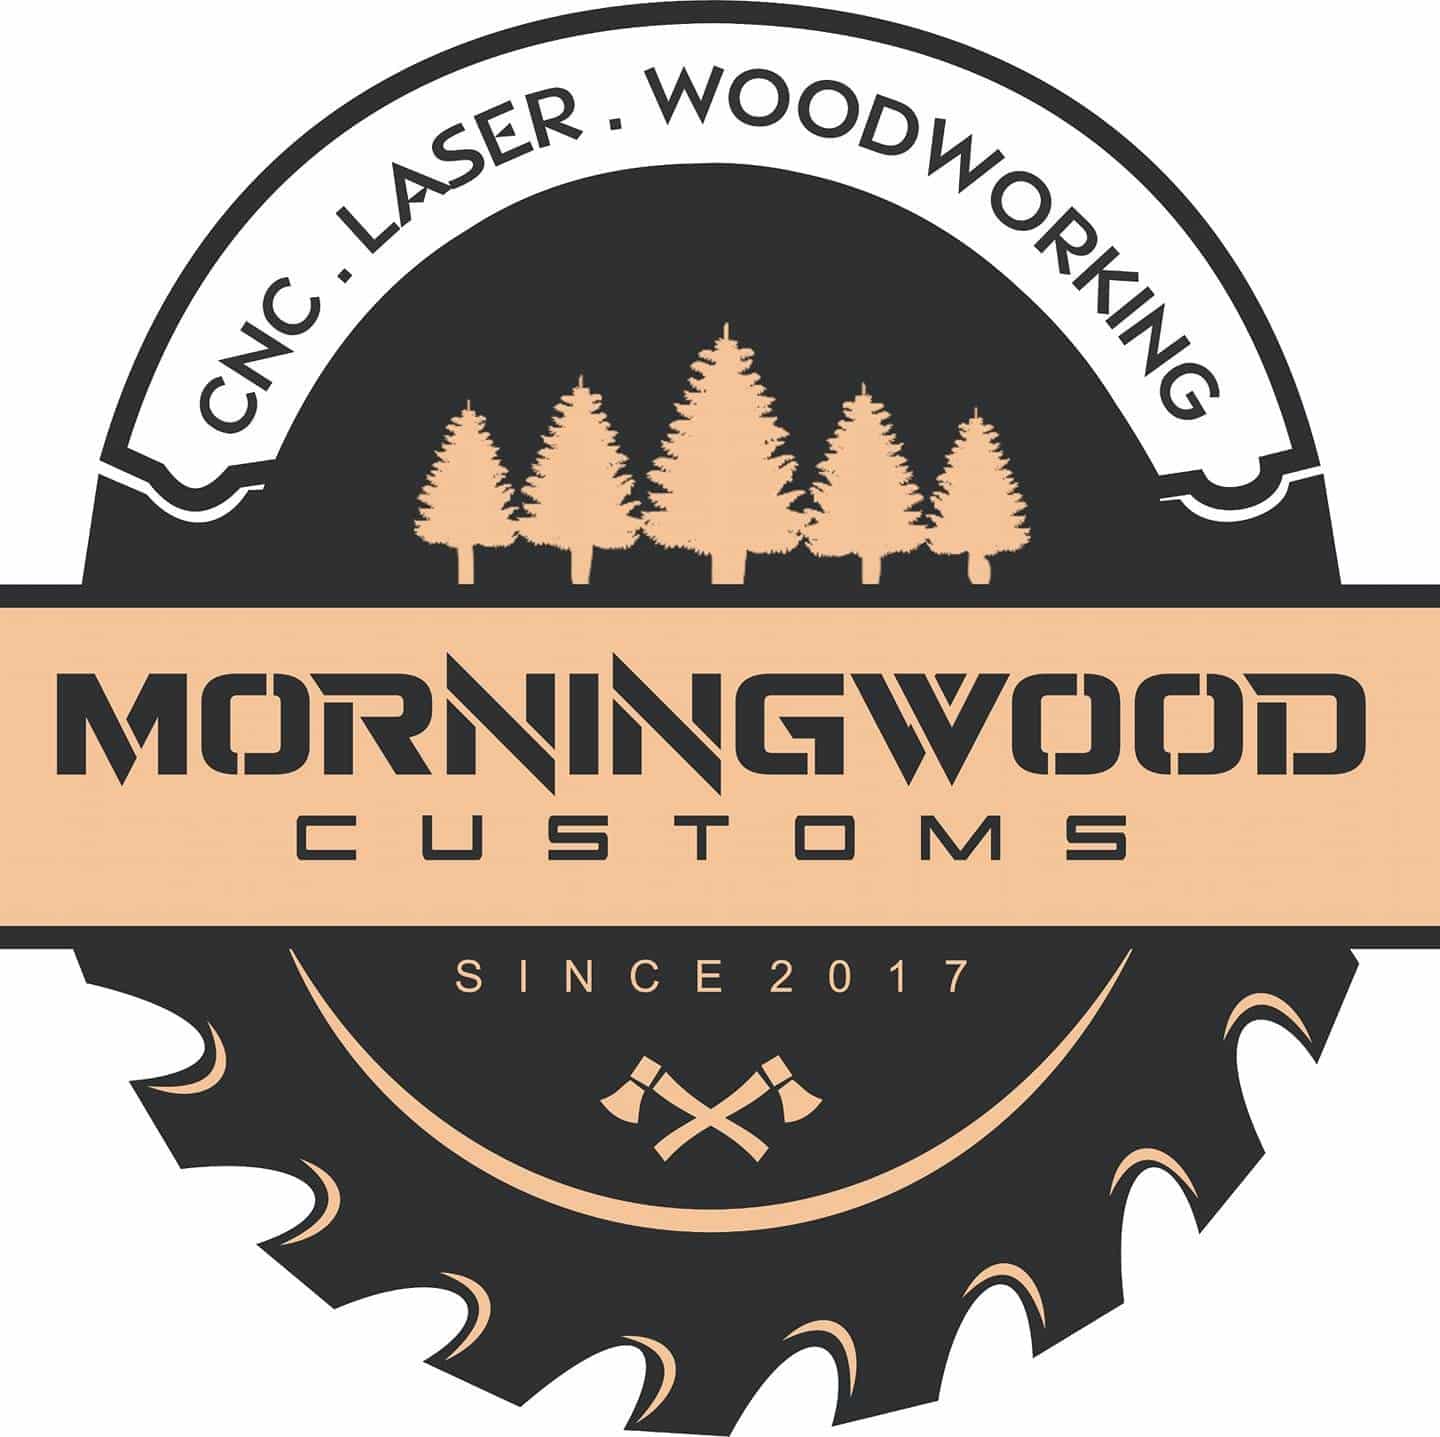 Morning Wood Customs